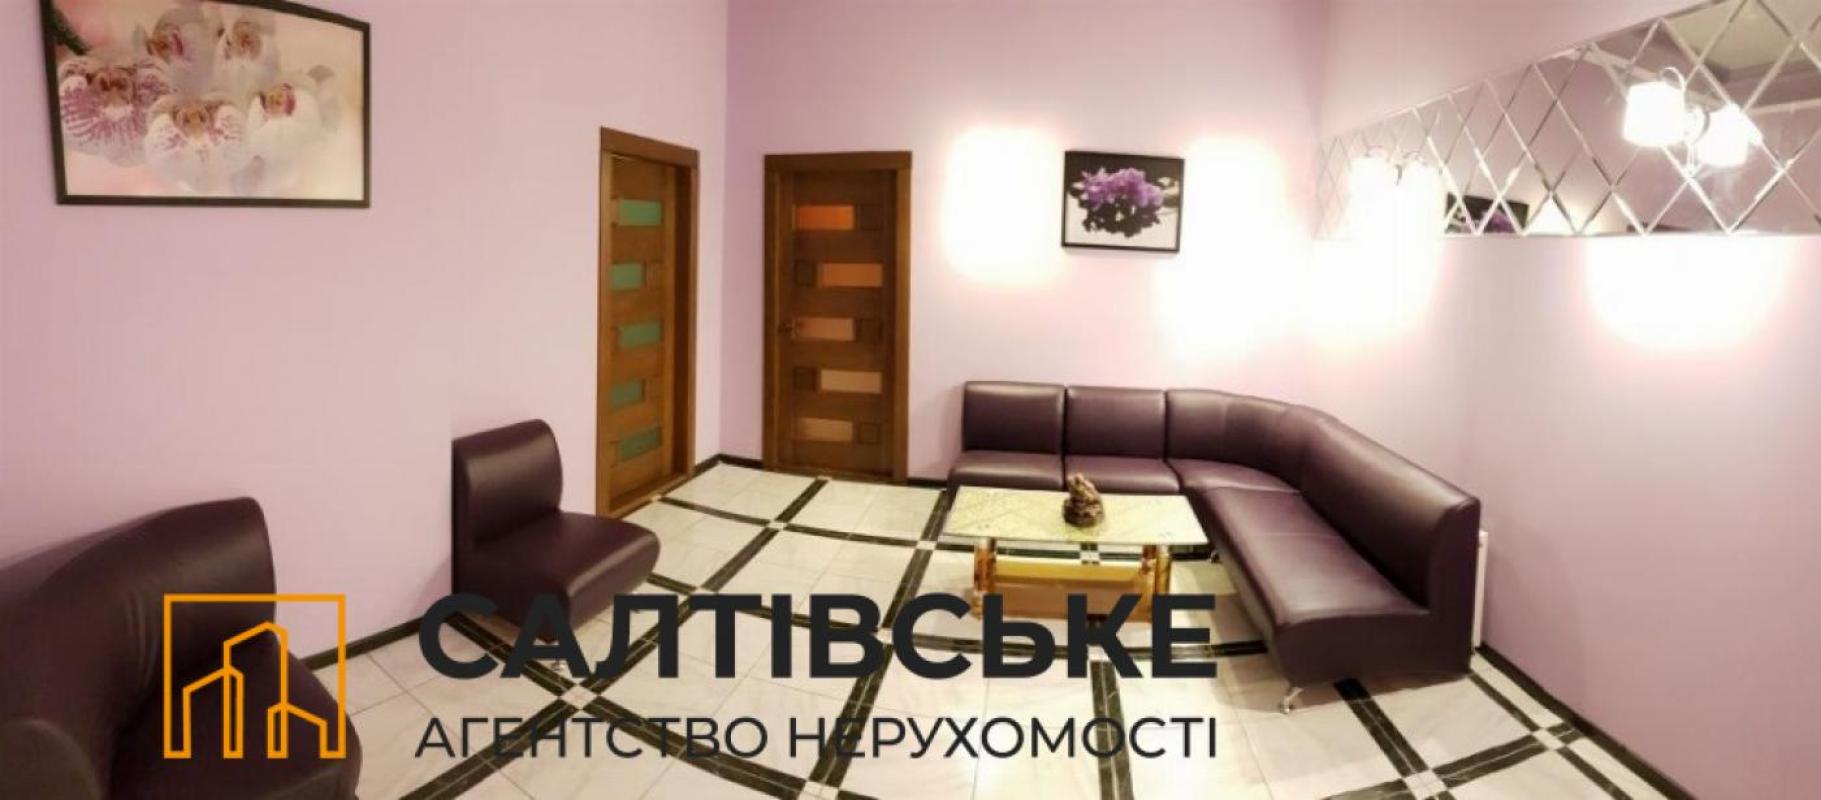 Sale 3 bedroom-(s) apartment 123 sq. m., Akademika Barabashova Street 32